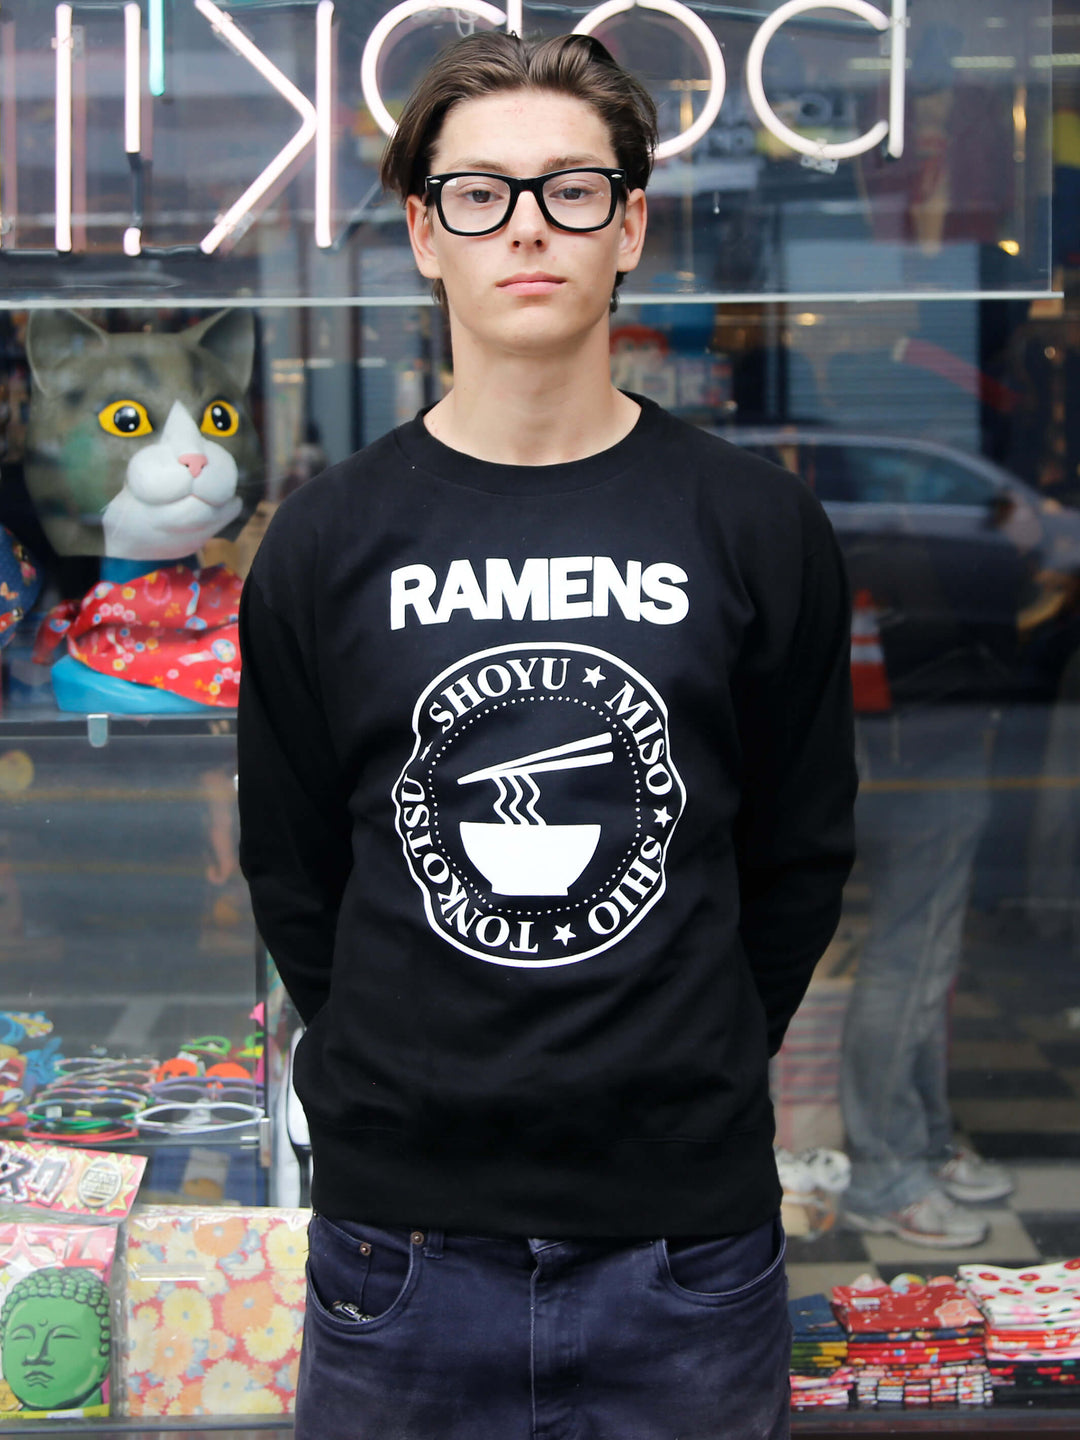 Ramones punk band parody graphic sweater.